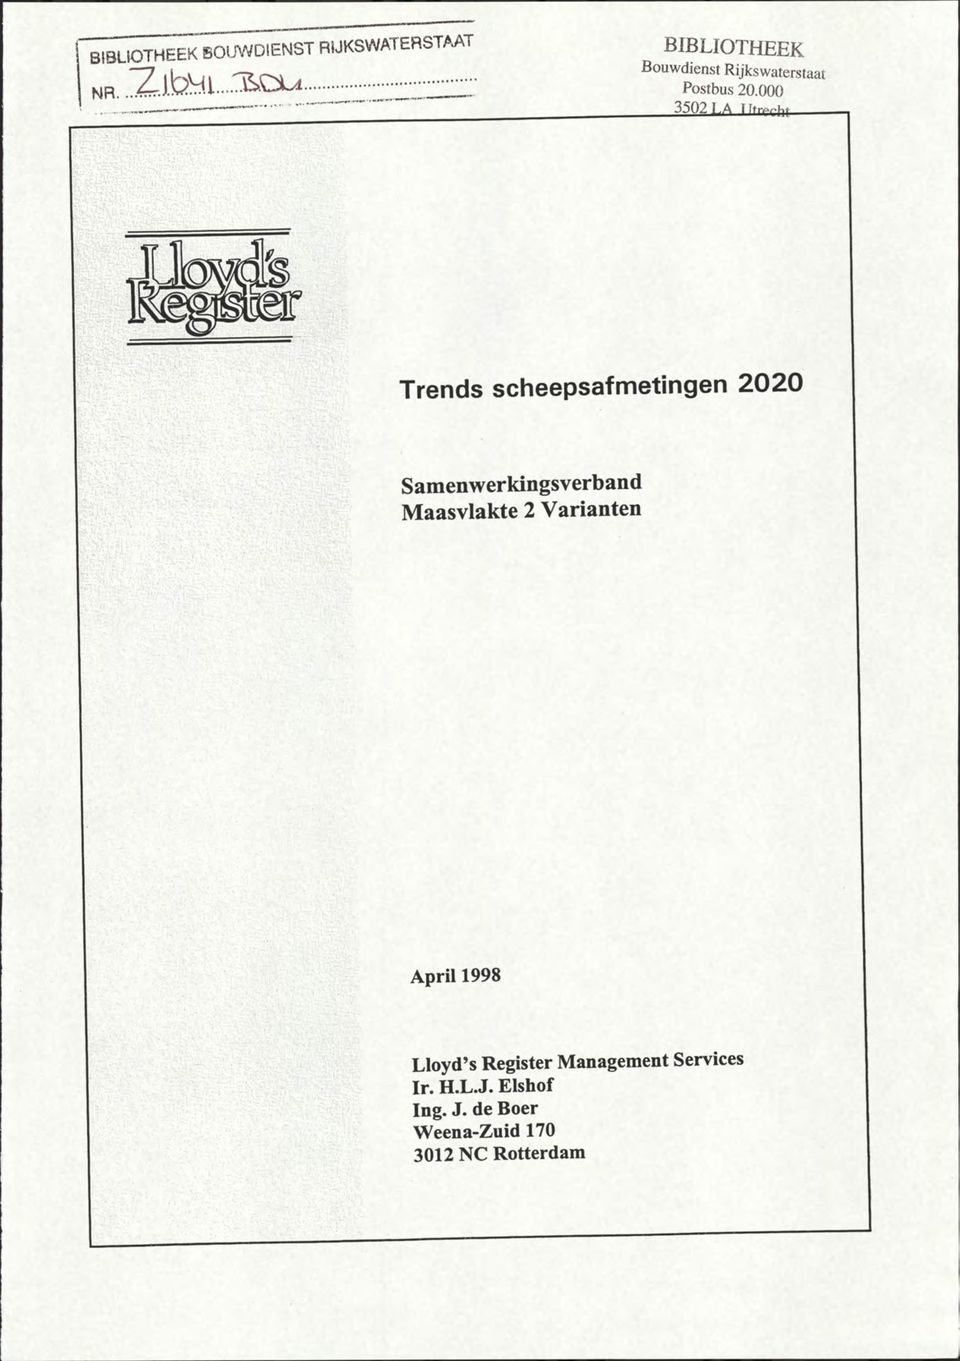 1 A iwk t Trends scheepsafmetingen 2020 Samenwerkingsverband Maasvlakte 2